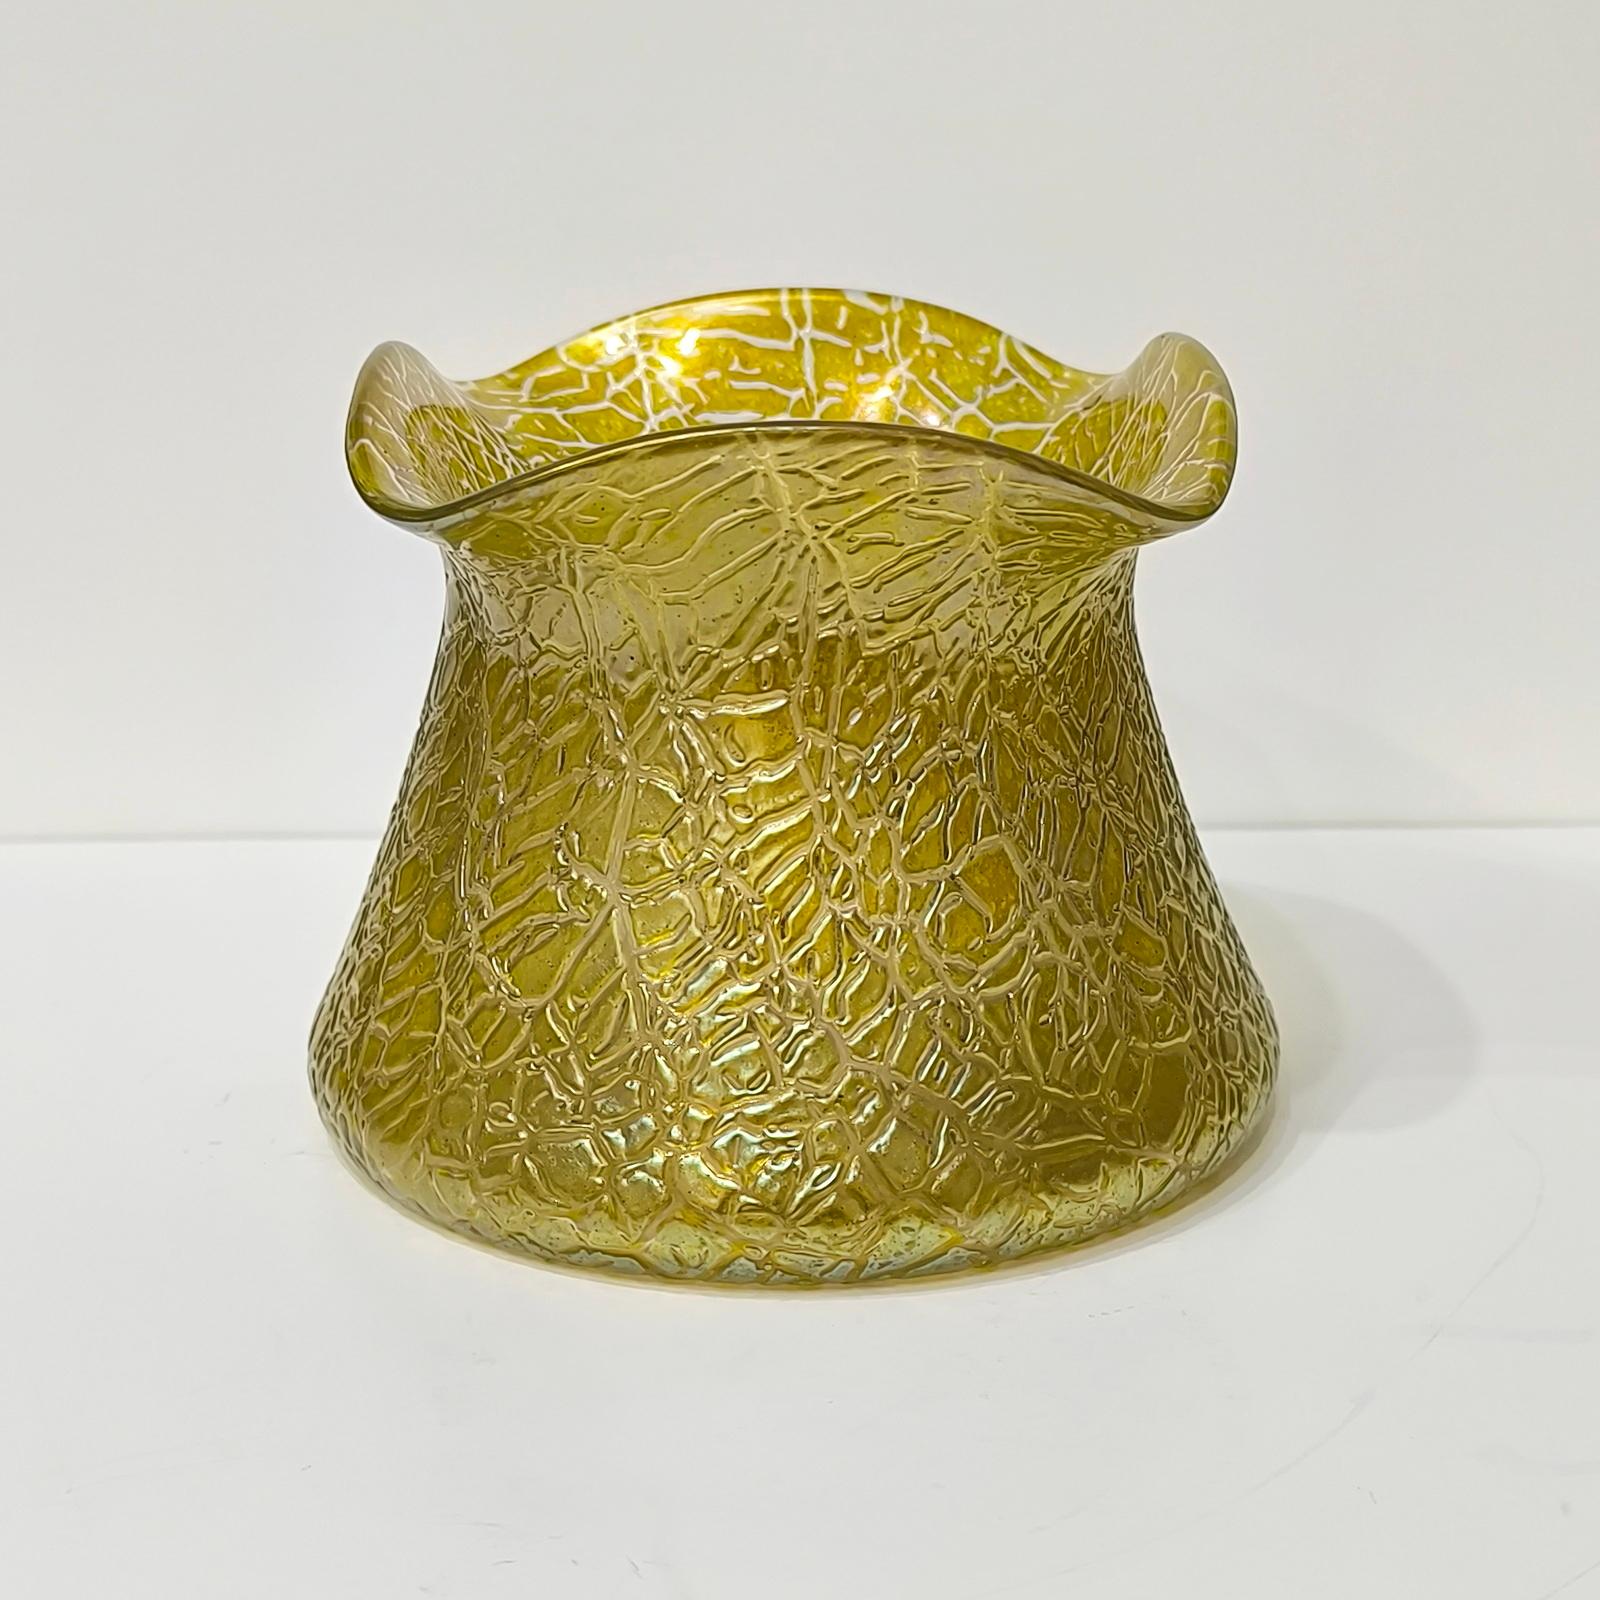 Loetz Candia Mimoza Art Nouveau Jugendstil Art Glass Bowl For Sale 1